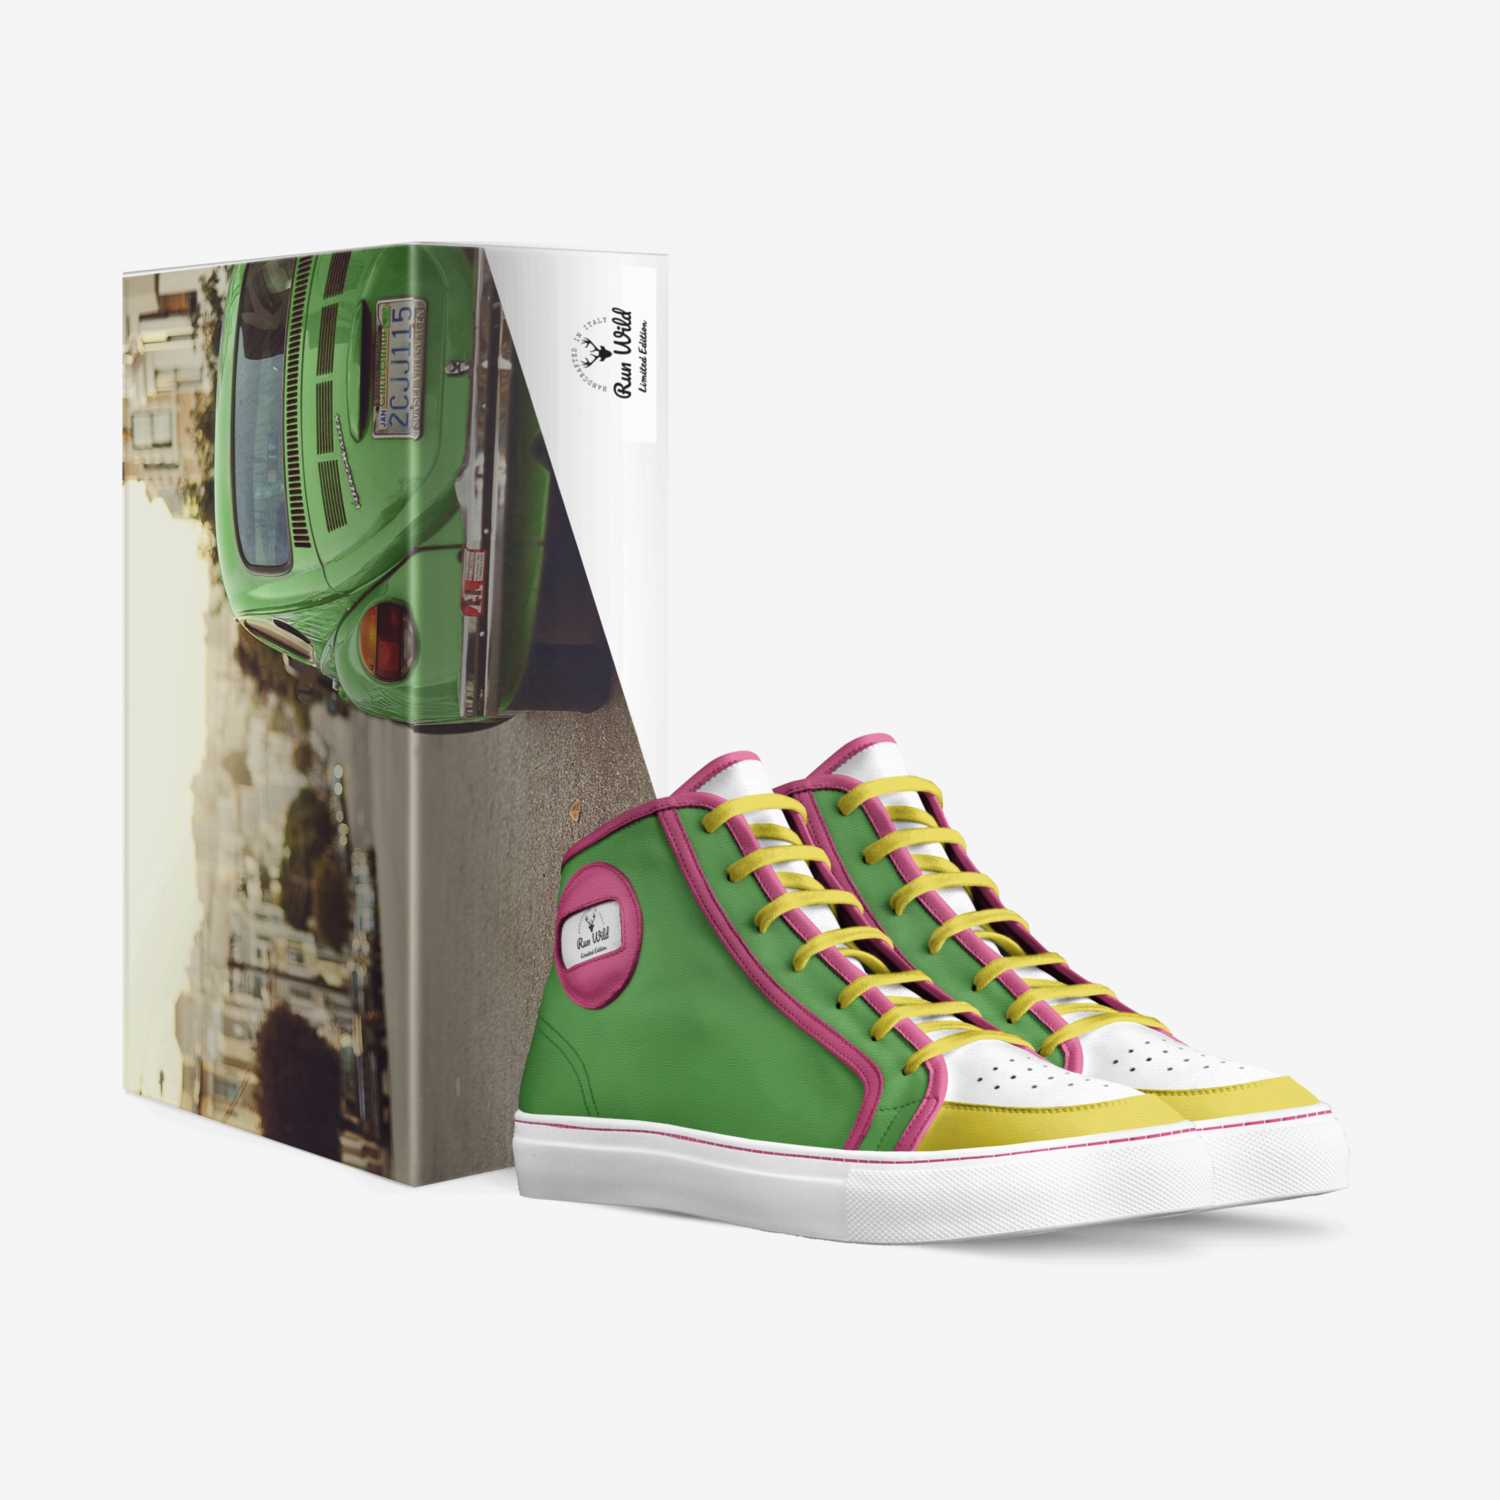 Run Wild custom made in Italy shoes by Bob Jones | Box view